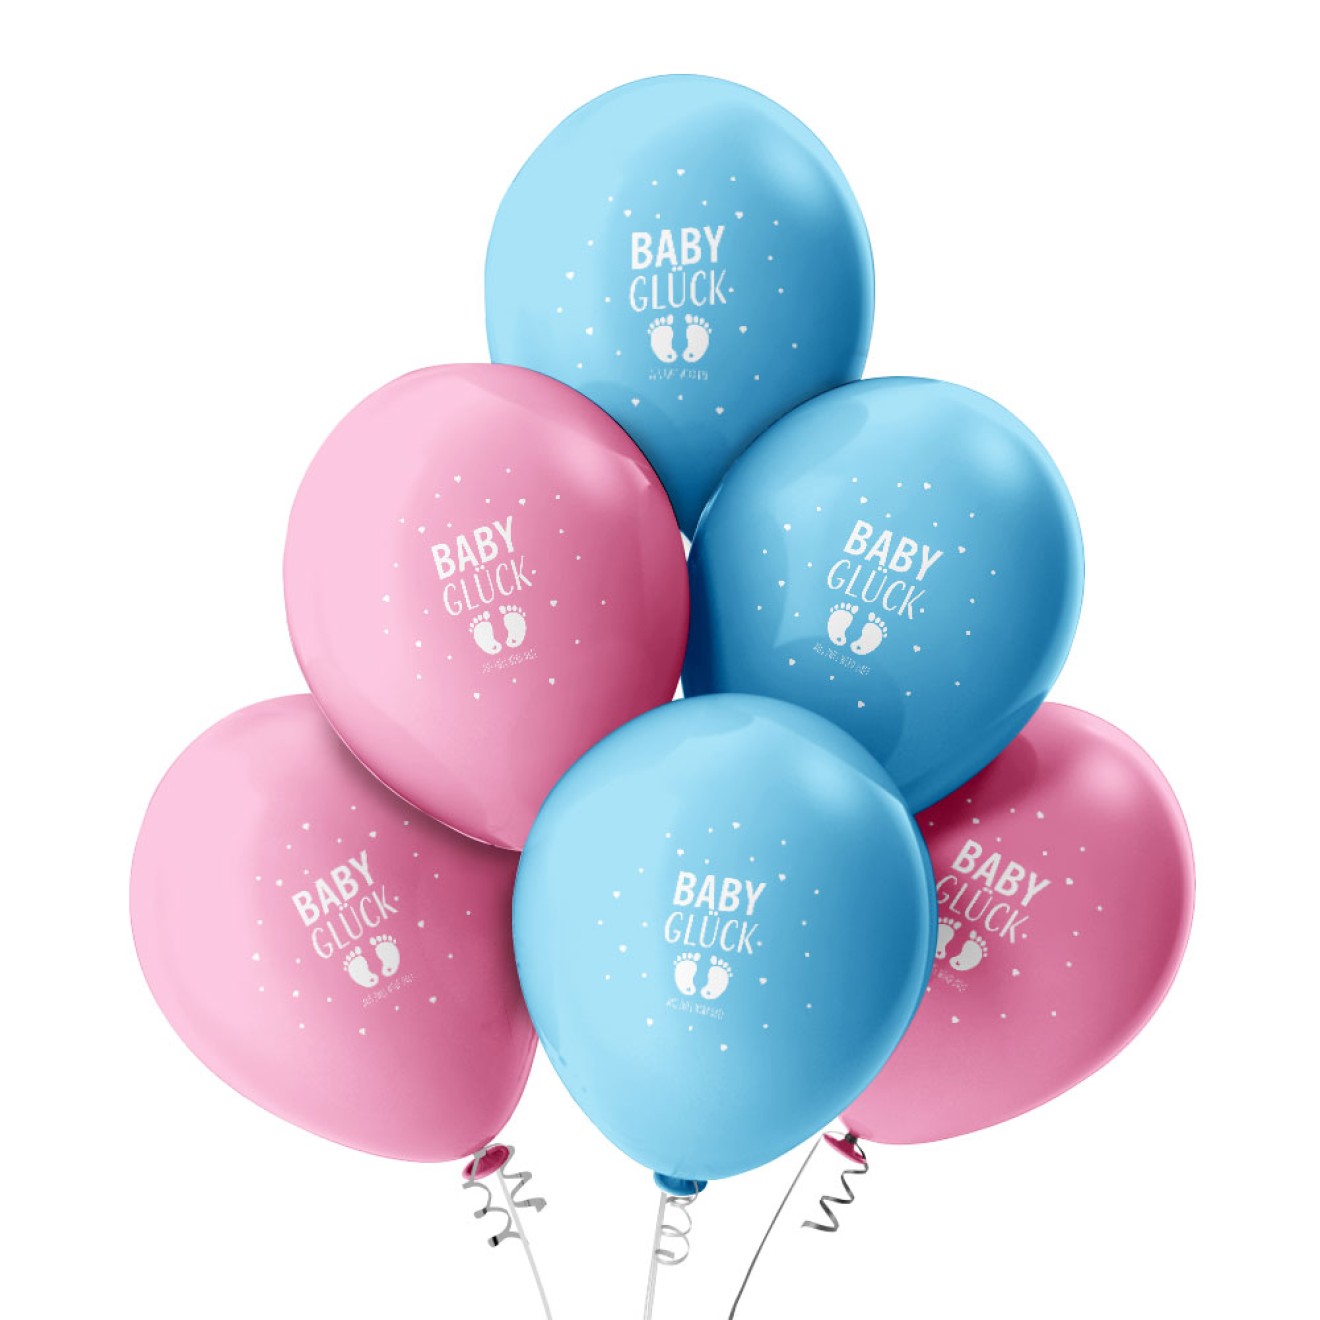 6 Luftballons Baby Glück - Freie Farbauswahl